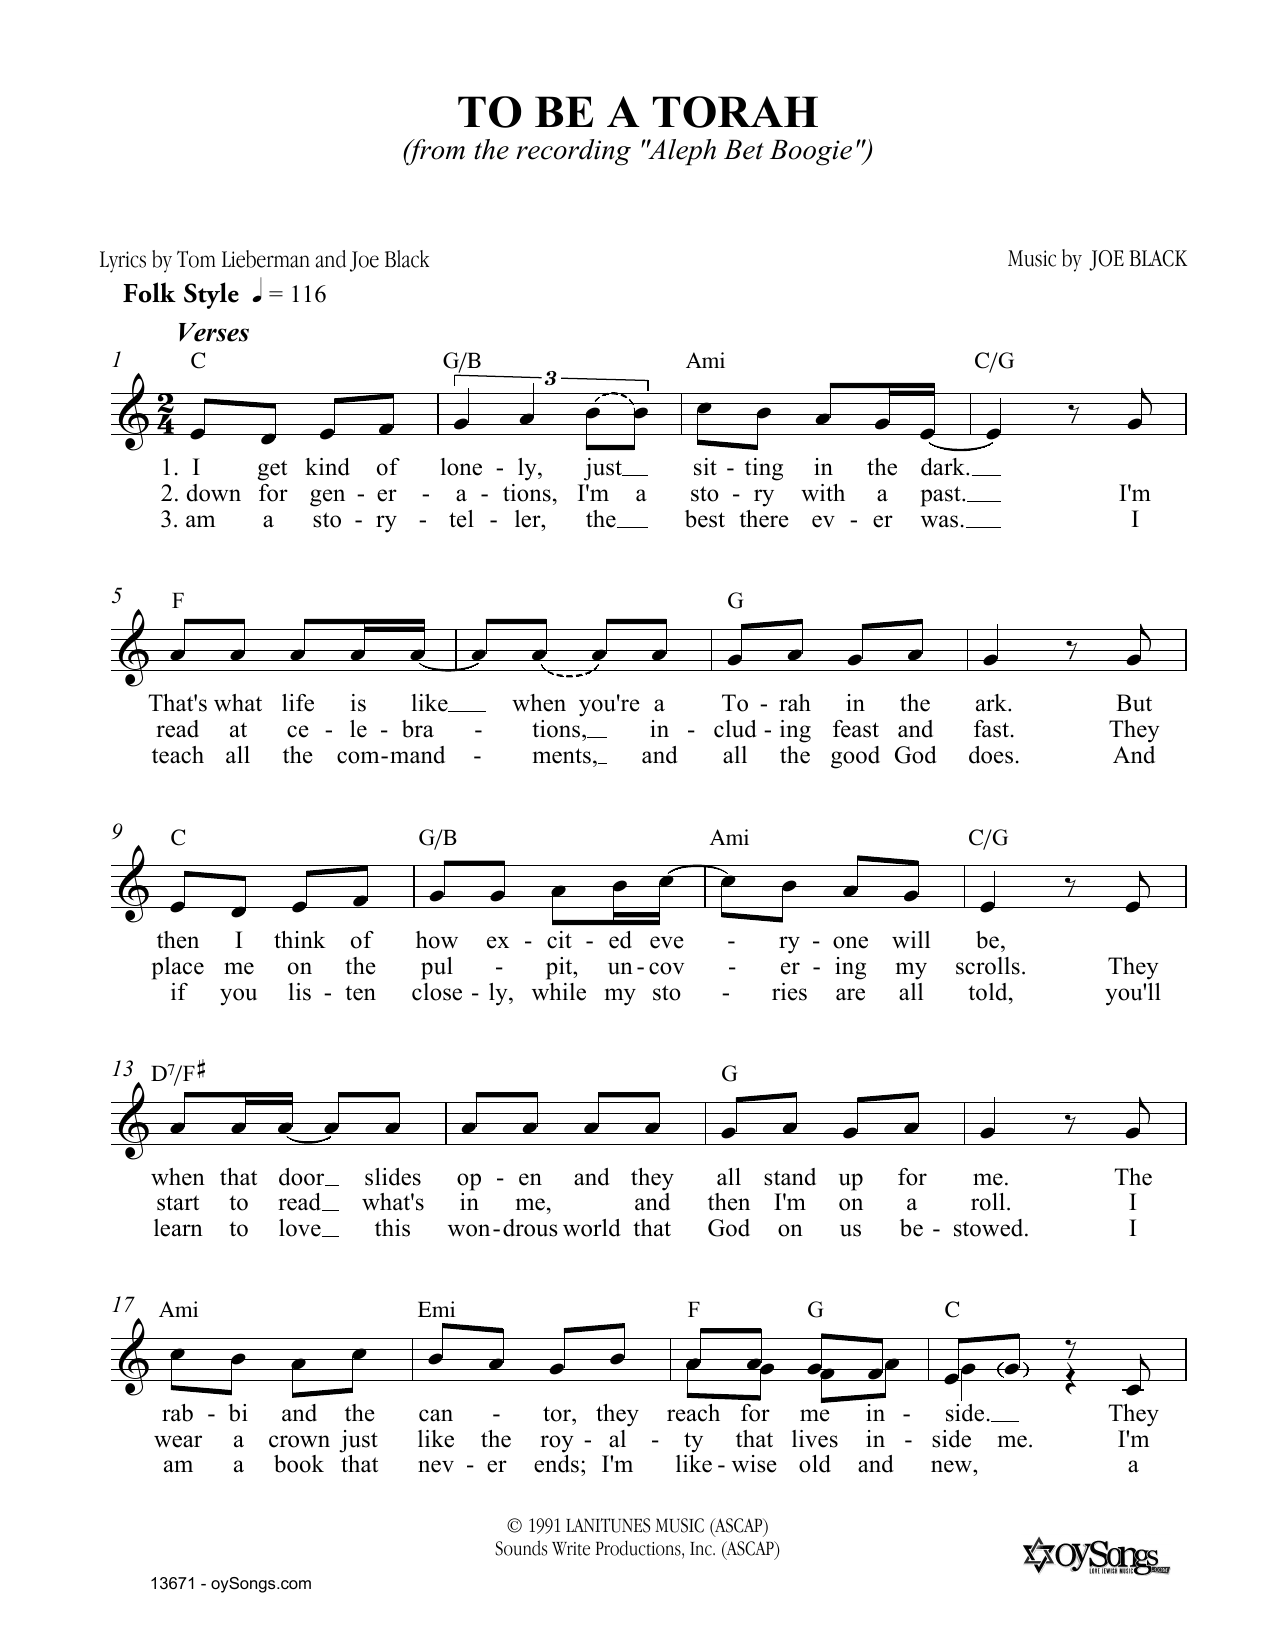 Joe Black To Be A Torah Sheet Music Notes & Chords for Melody Line, Lyrics & Chords - Download or Print PDF